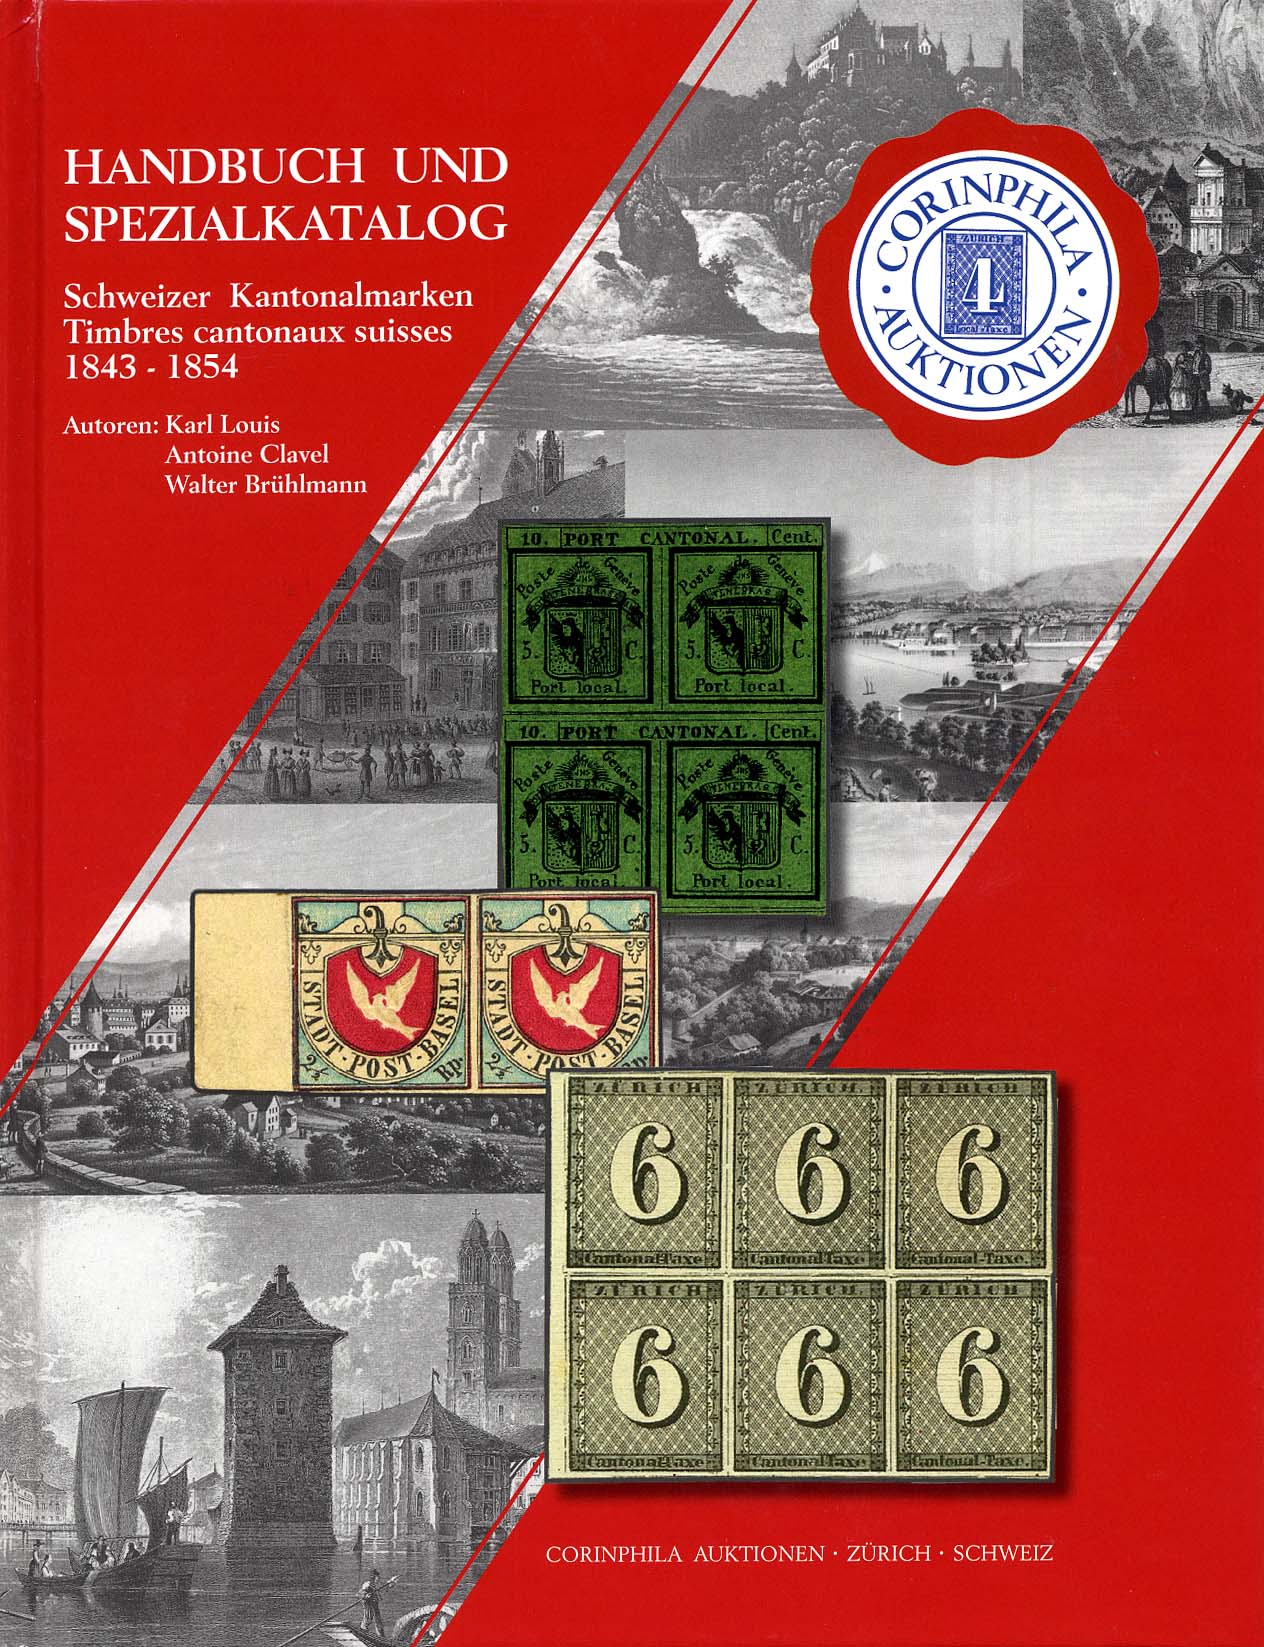 Reference book and Special Catalogue Schweizer Kantonalmarken